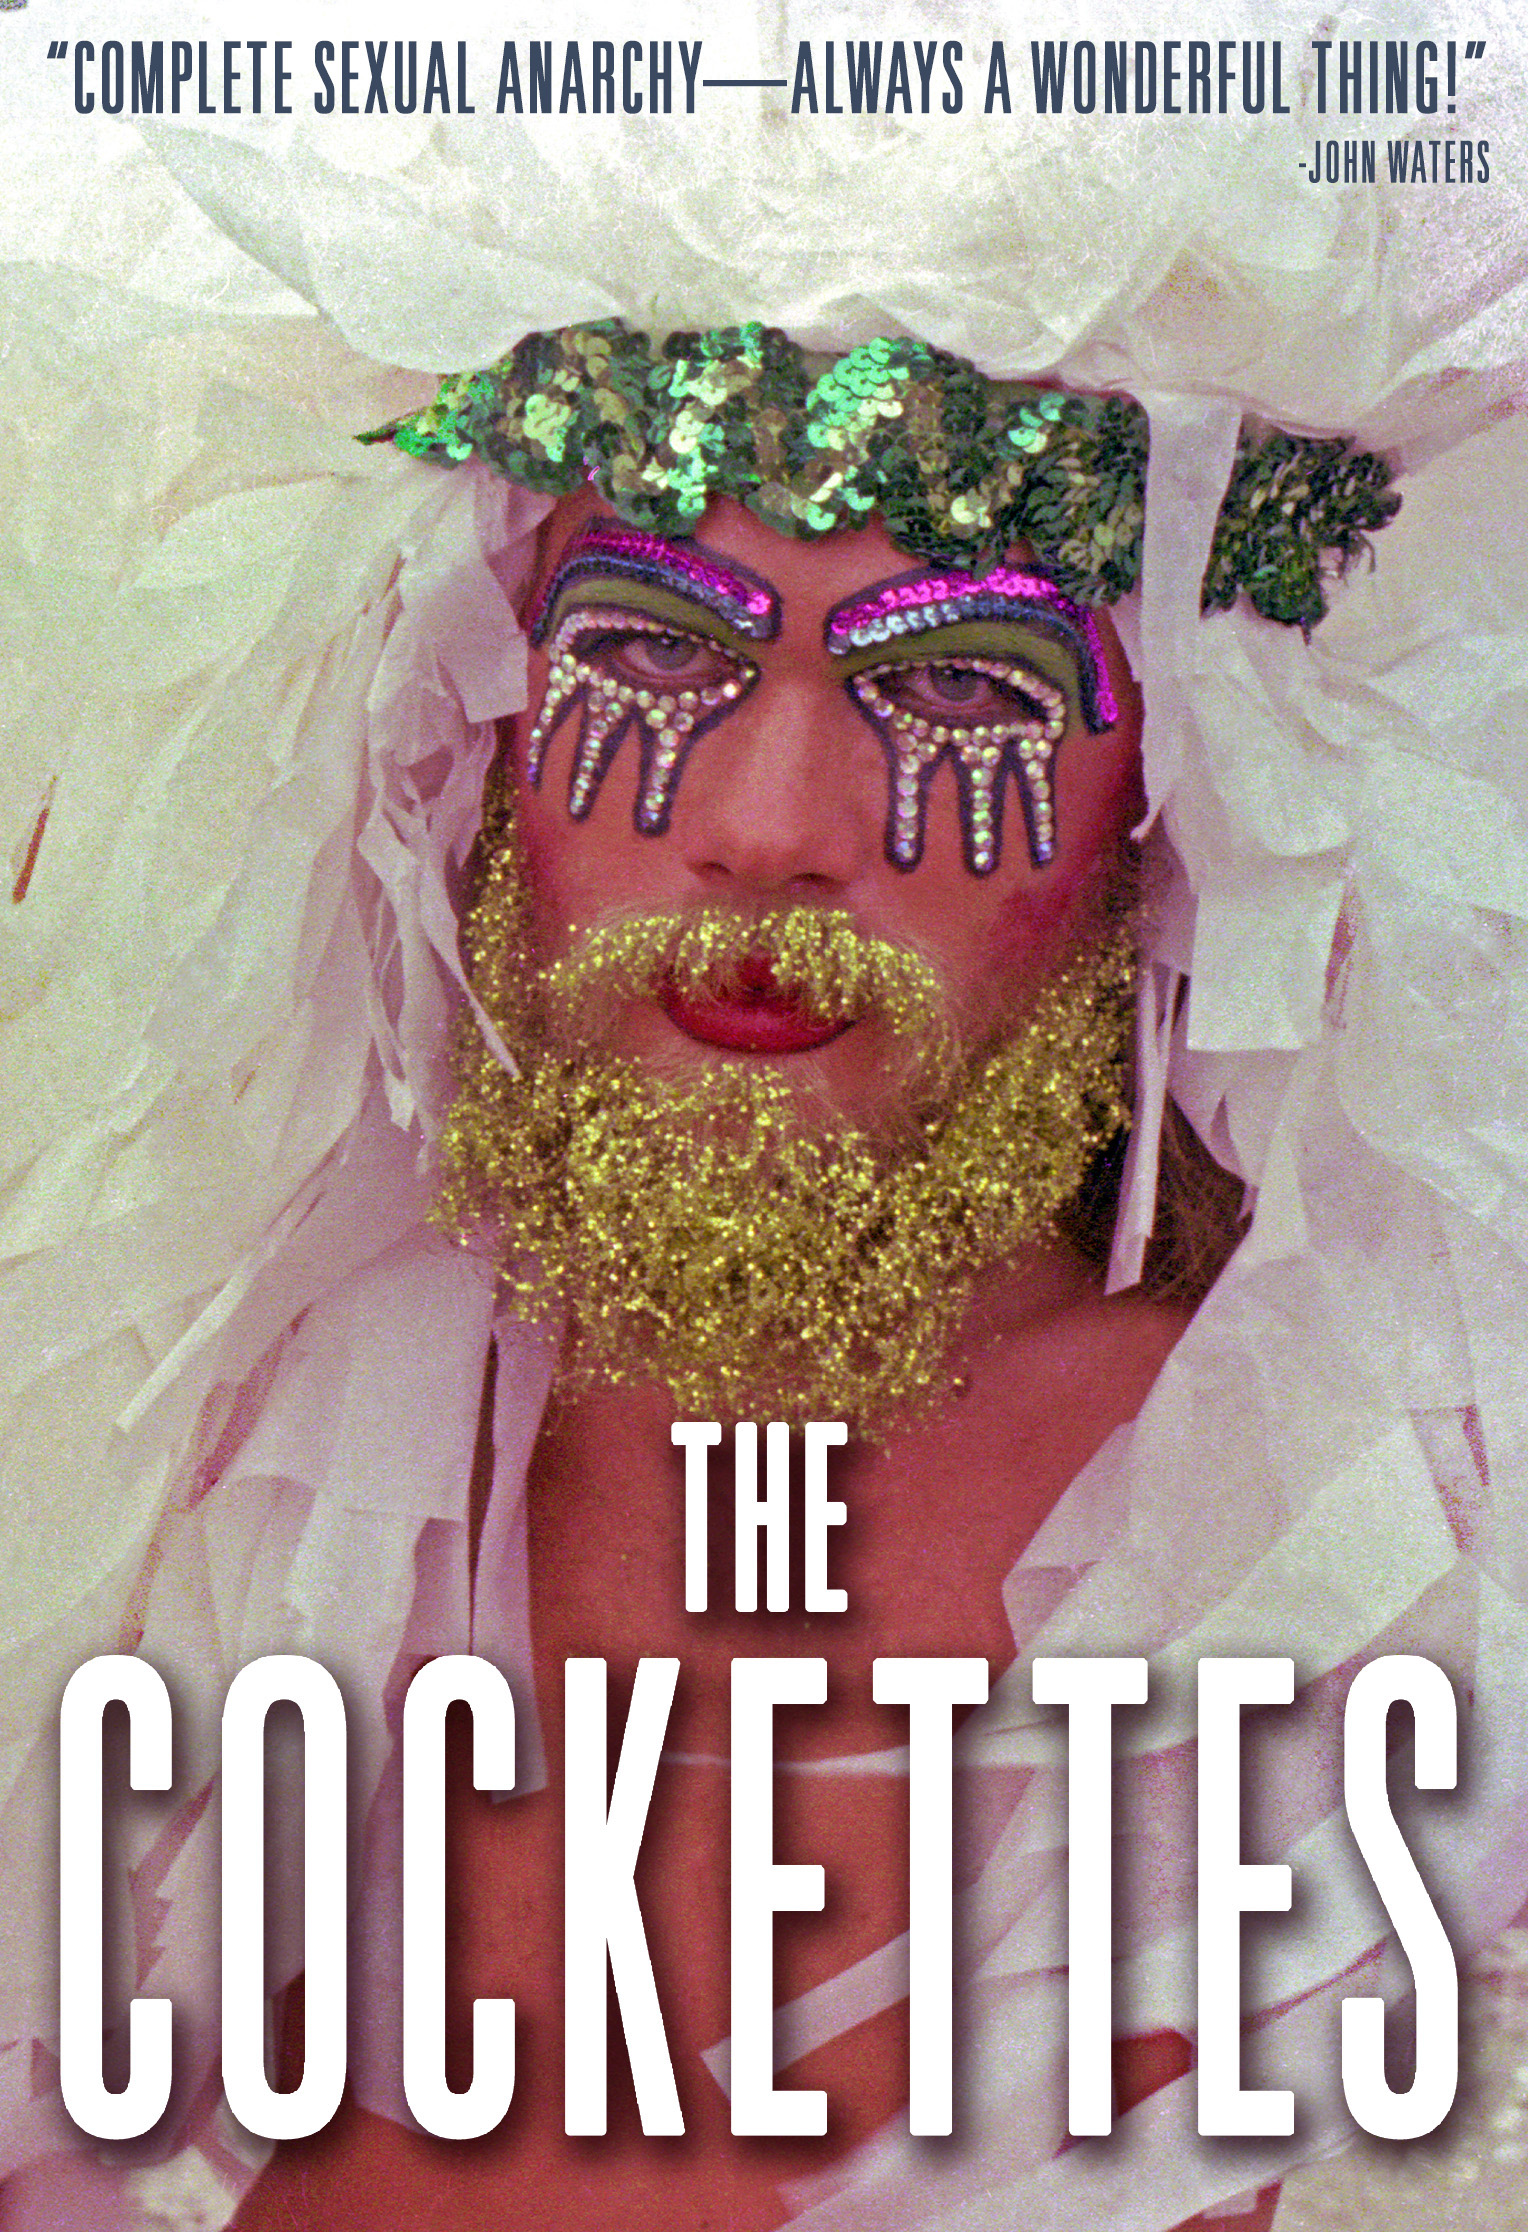 The Cockettes (2002) Screenshot 1